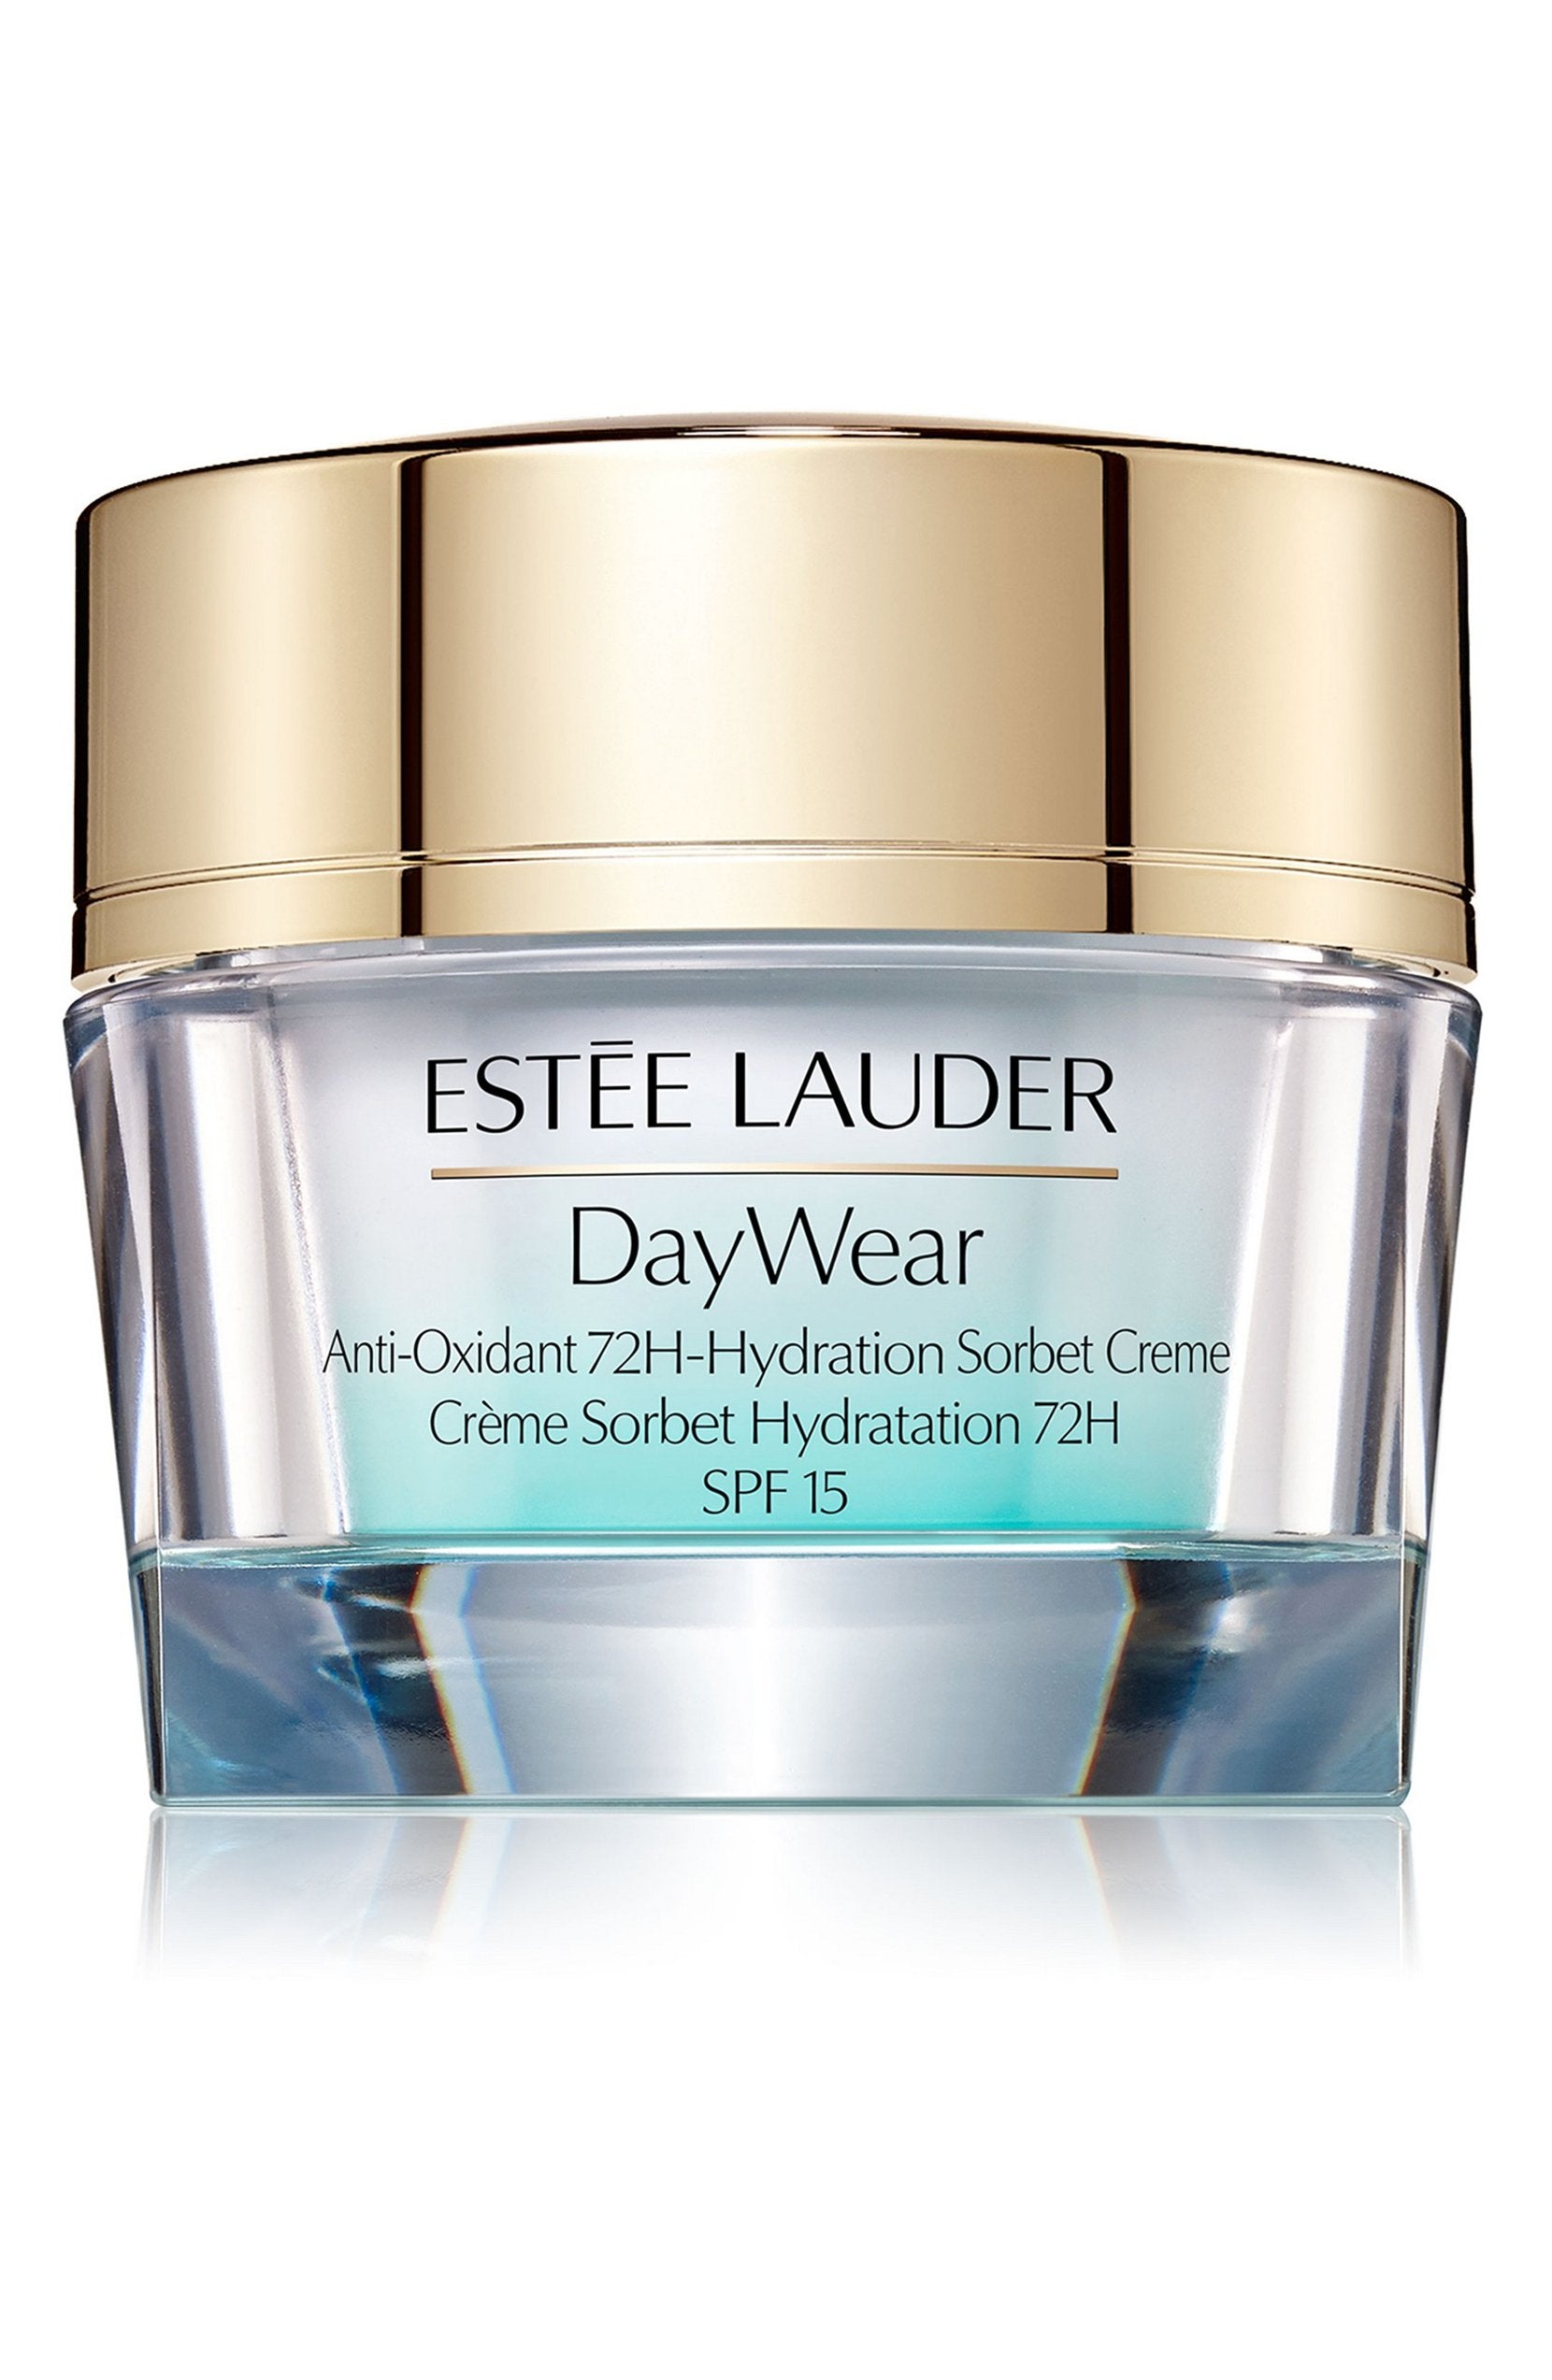 Estee Lauder DayWear Anti-Oxidant 72H-Hydration Sorbet Creme SPF 15 - eCosmeticWorld